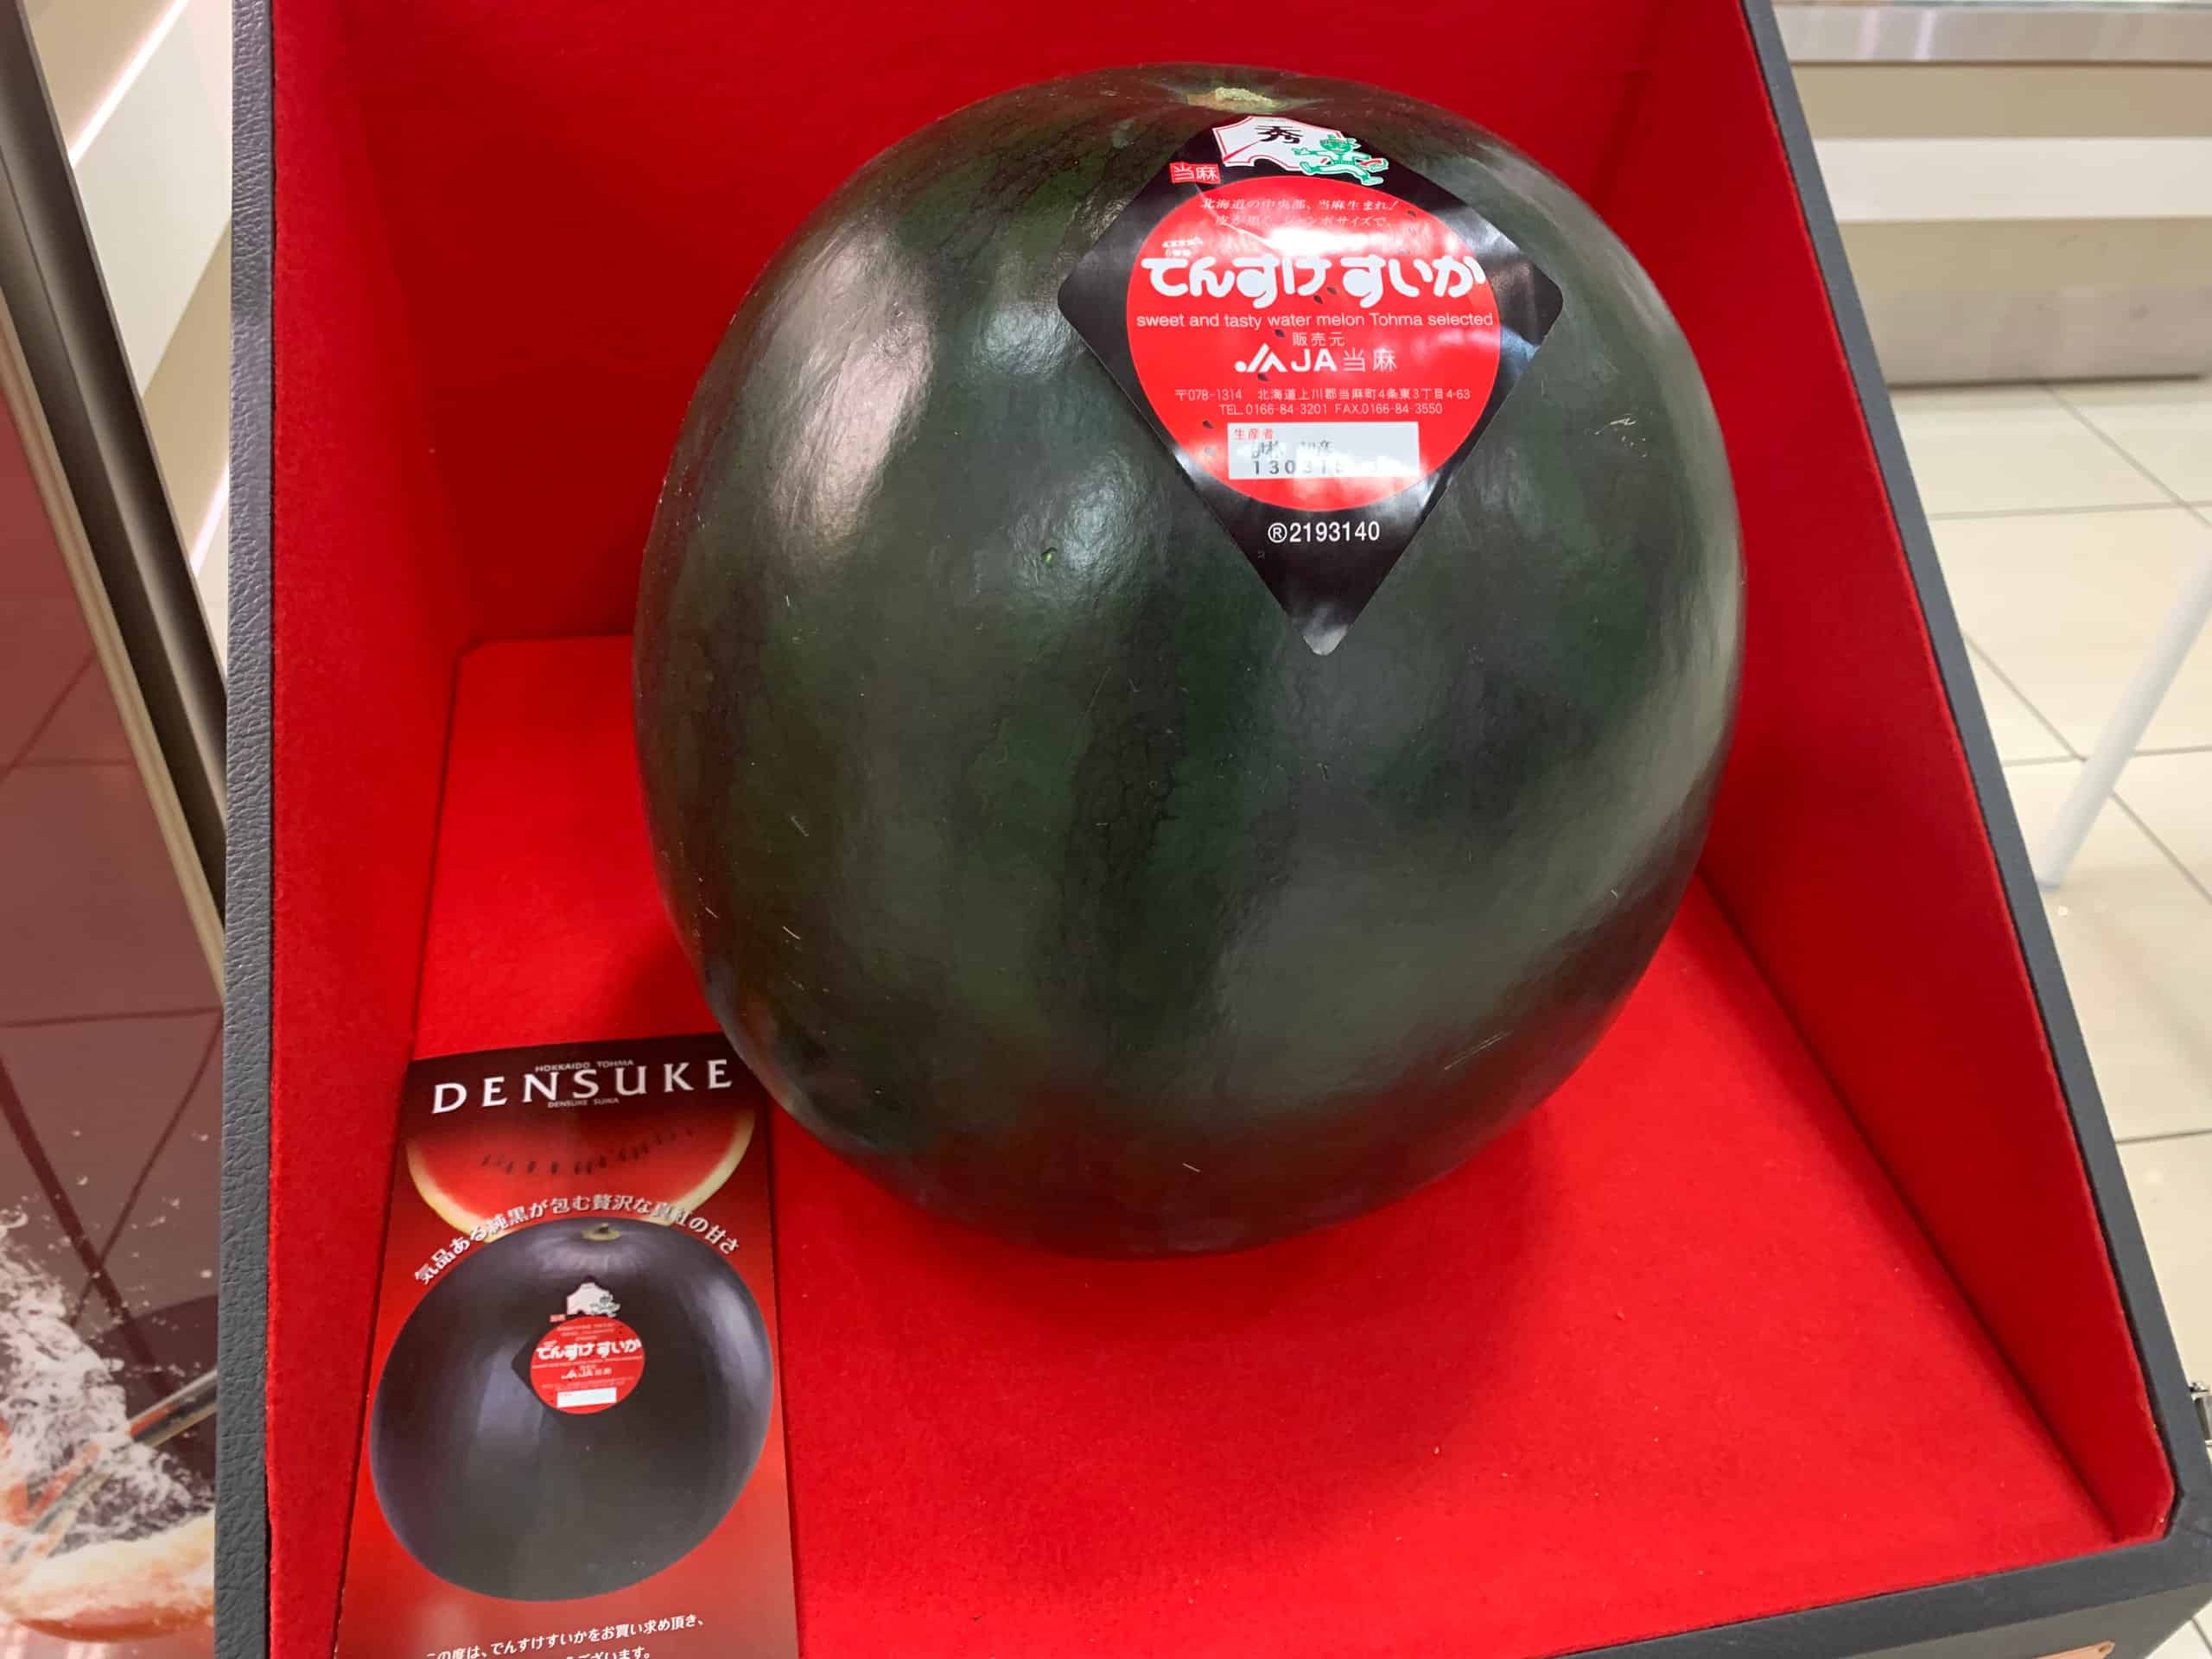 Densuke Watermelon